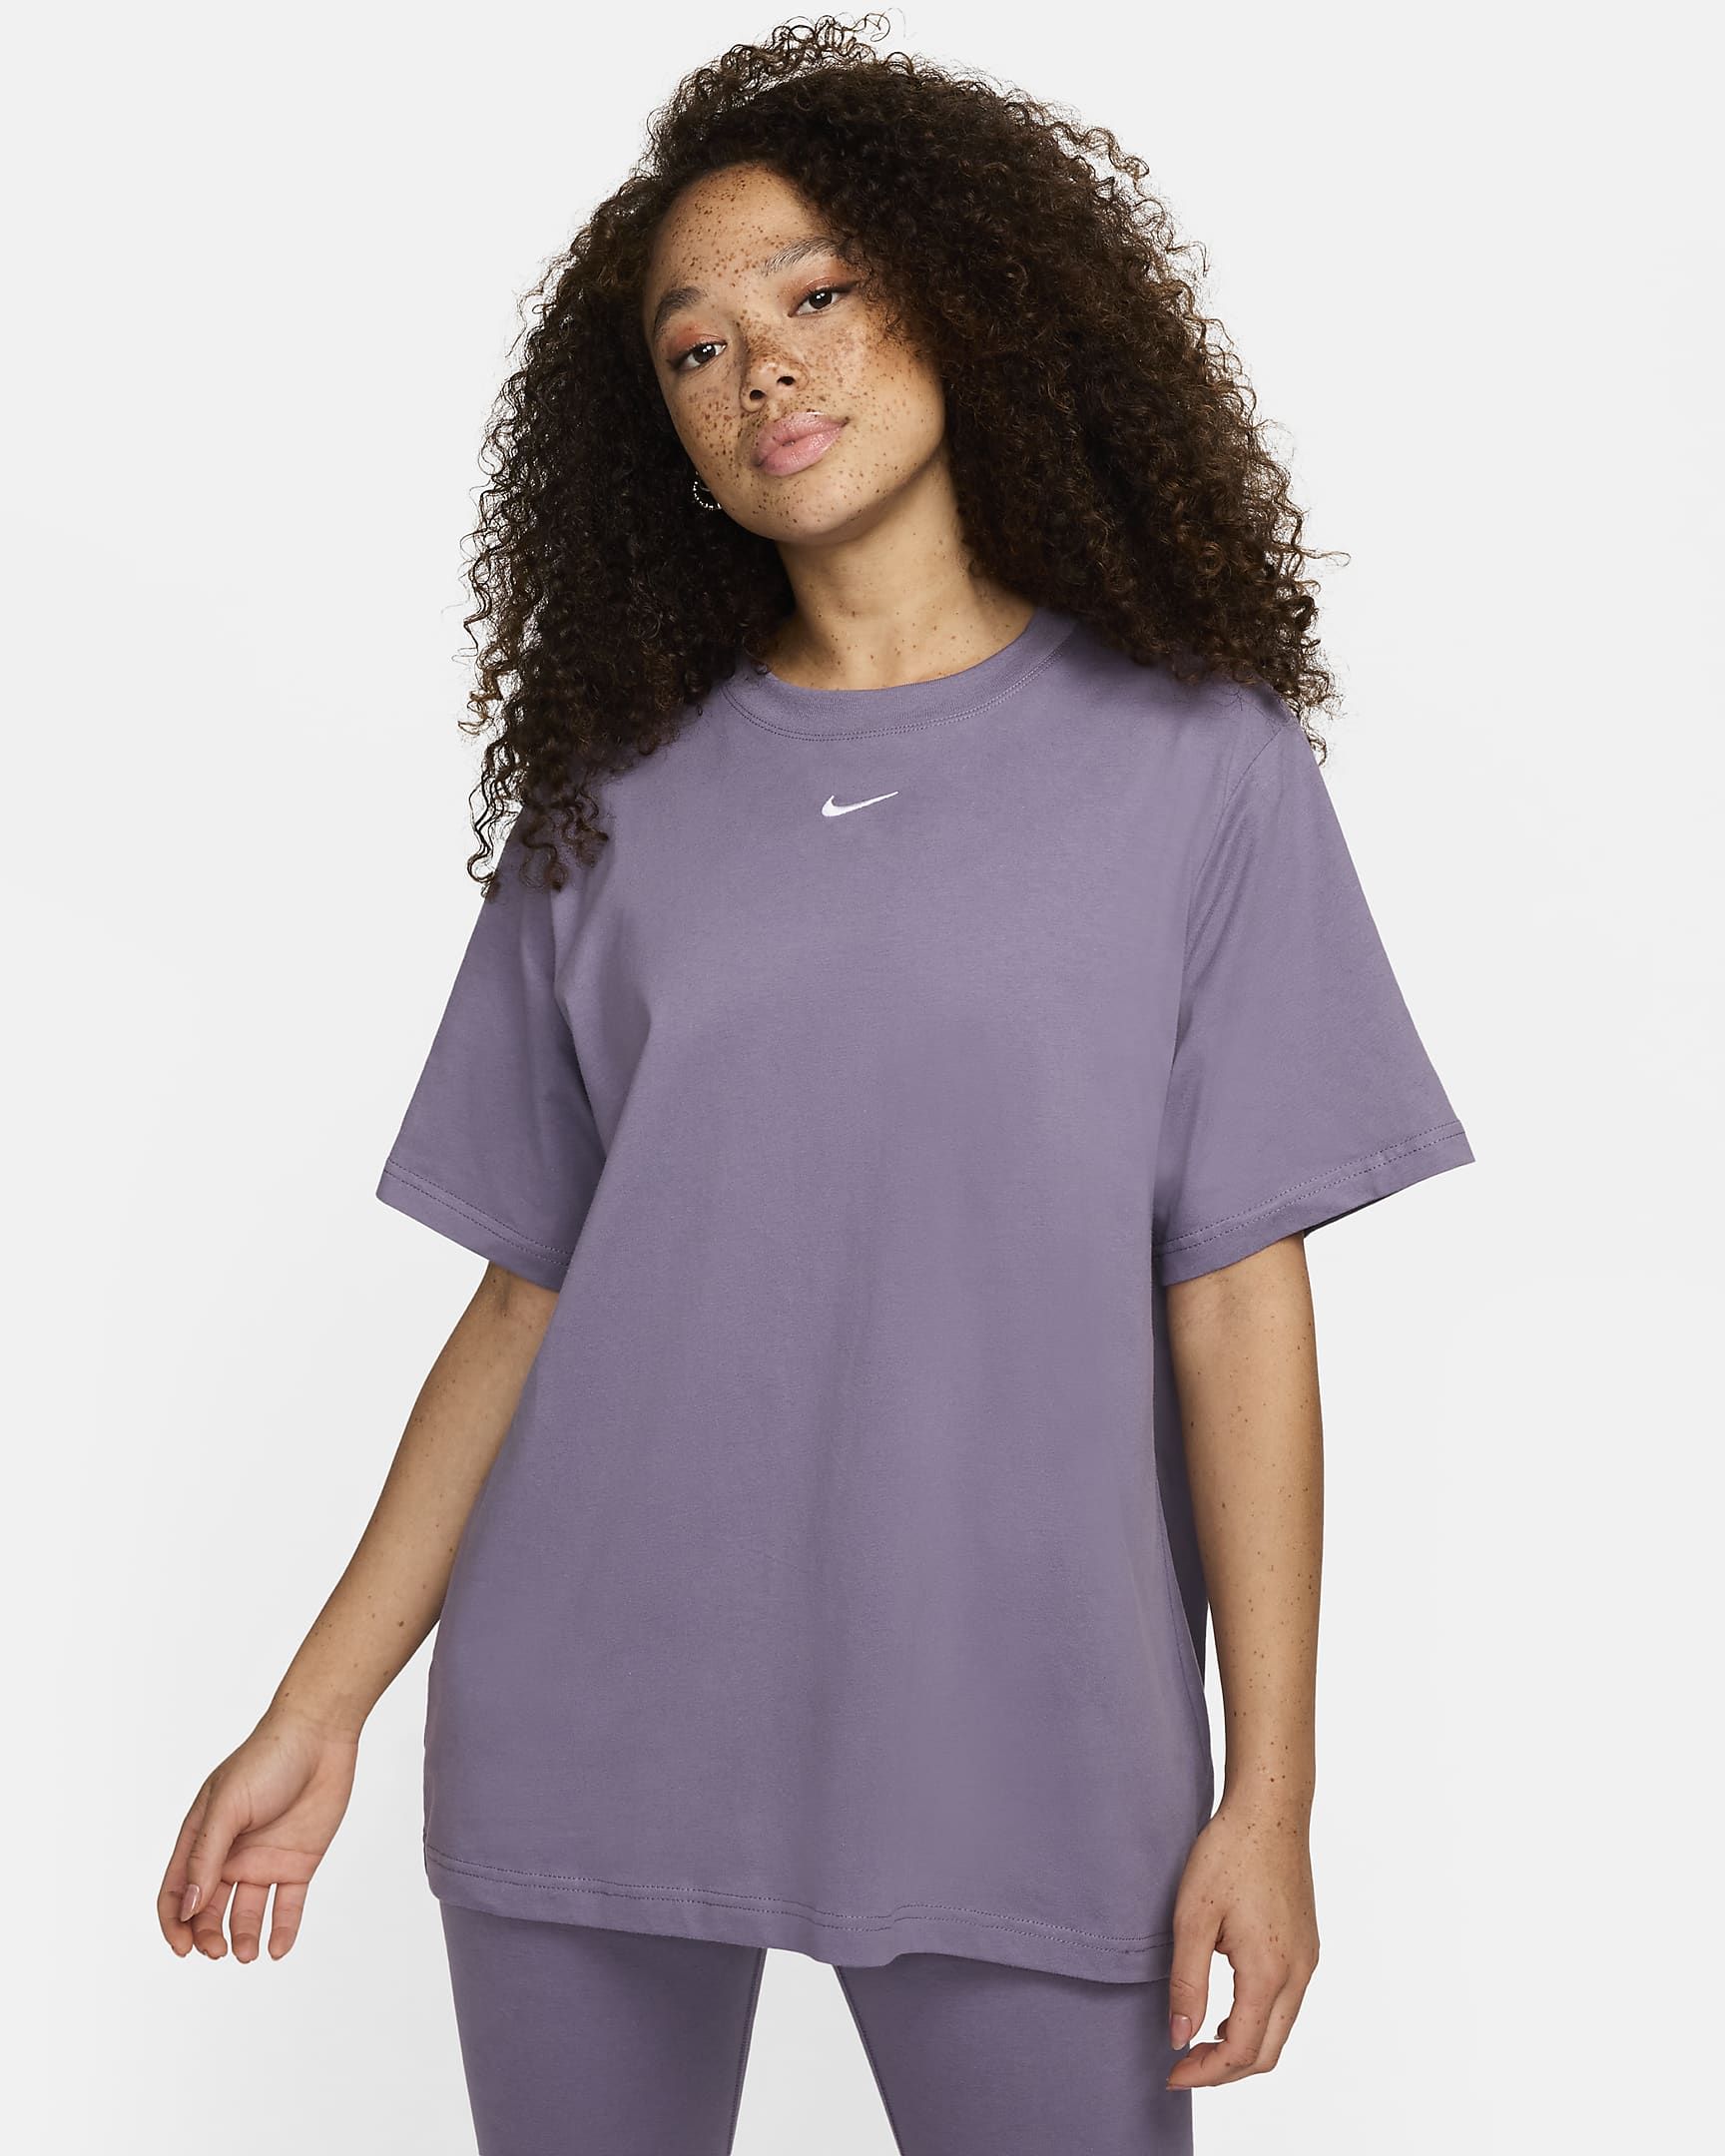 Nike Sportswear Essential Women's T-Shirt. Nike.com | Nike (US)